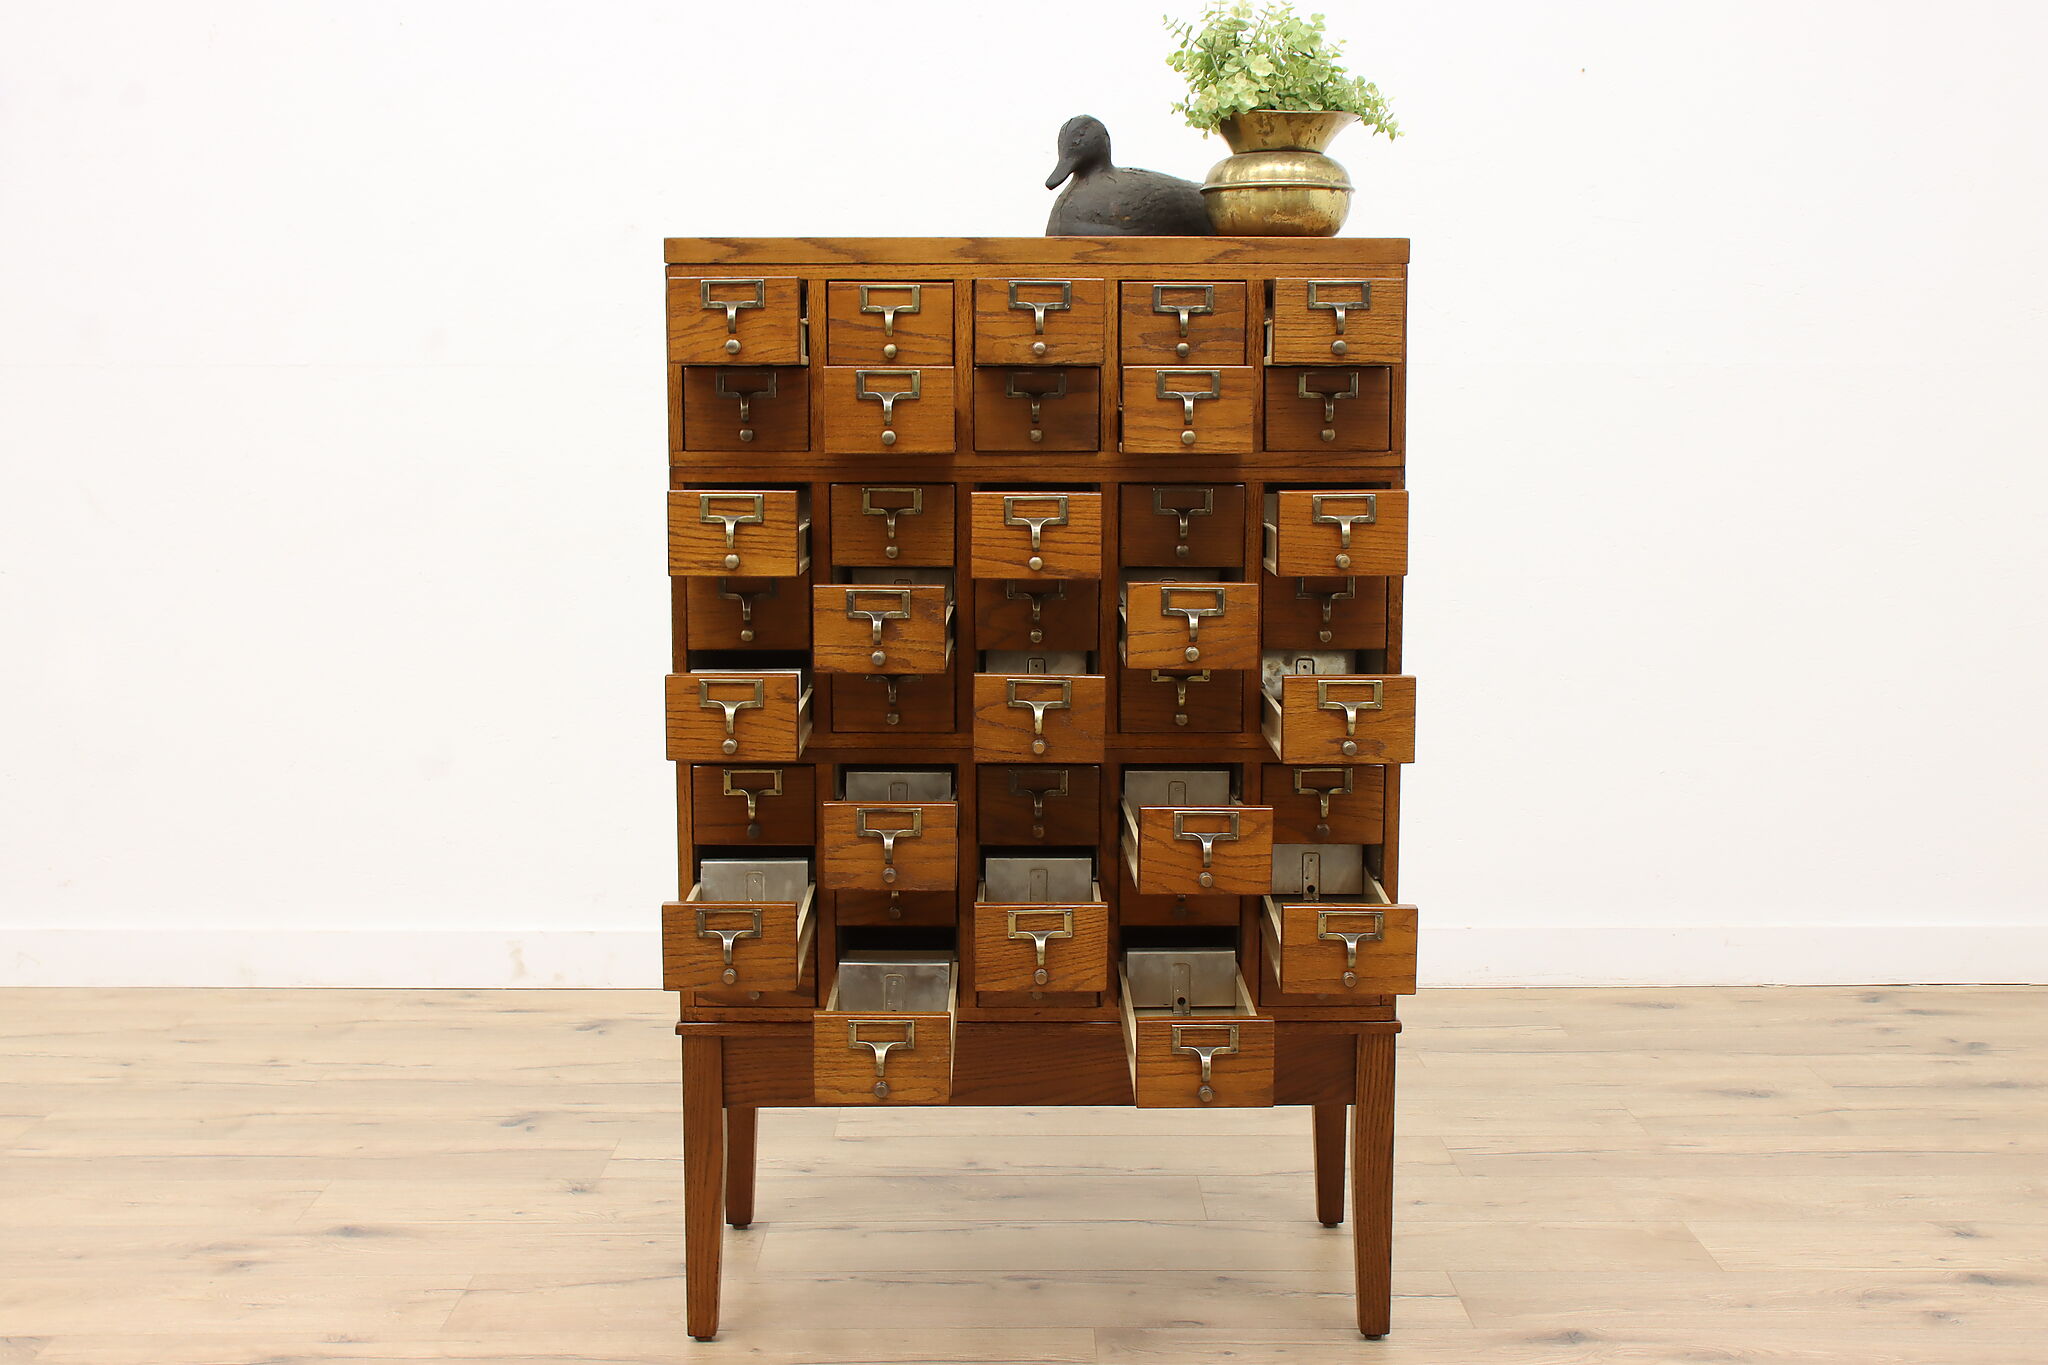 Stackable Vintage Wooden Storage Box | Multilevel Wood Table Top Desk  Drawer Organizer